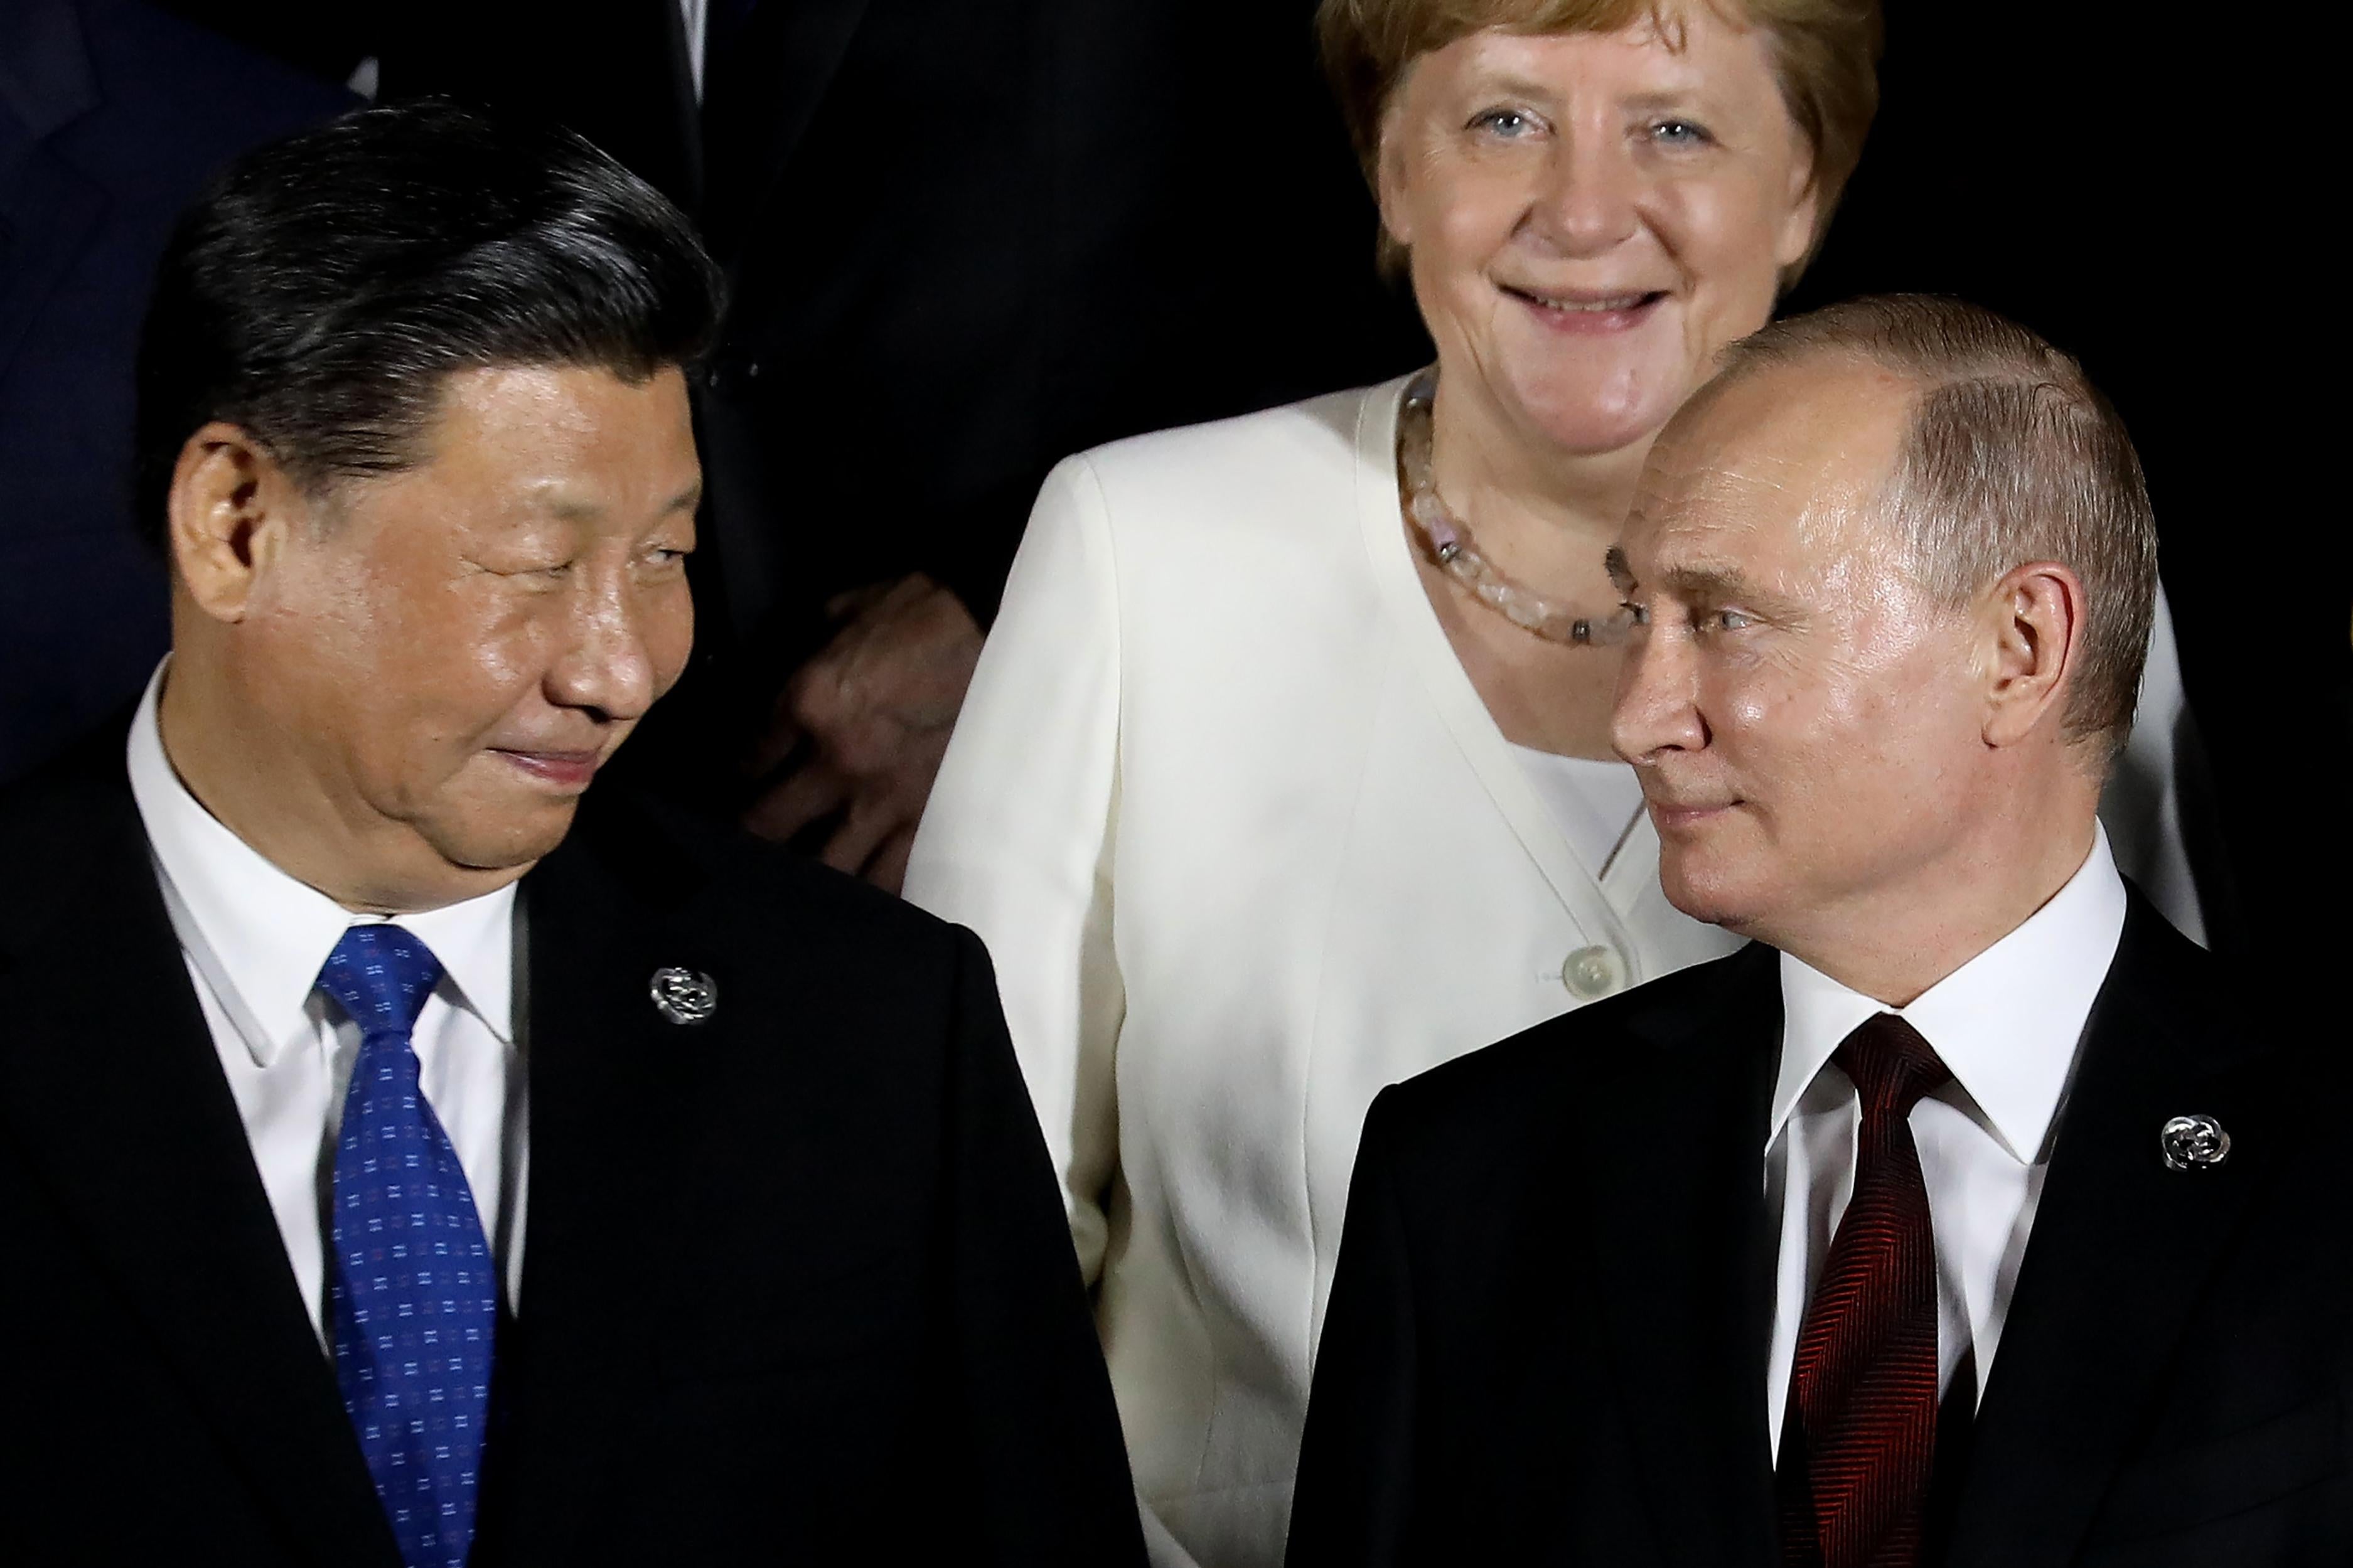 German Chancellor Angela Merkel stands behind Russian President Vladimir Putin and Chinese President Xi Jinping.